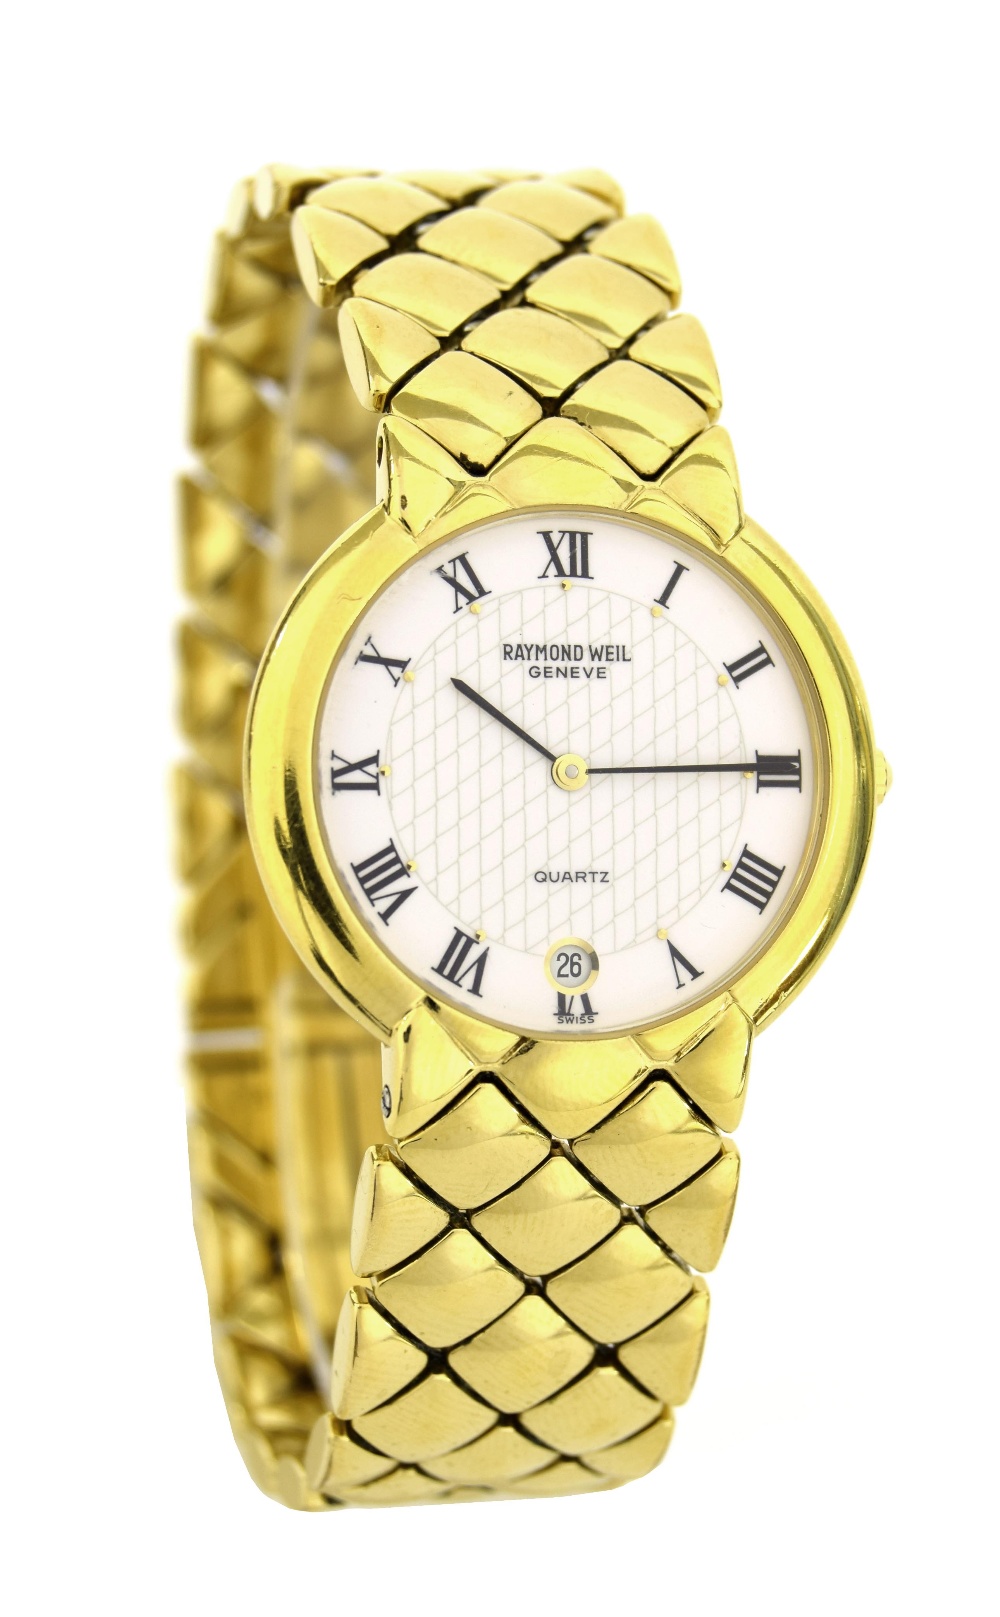 Raymond Weil Geneve 18k gold plated gentleman's bracelet watch, ref ...